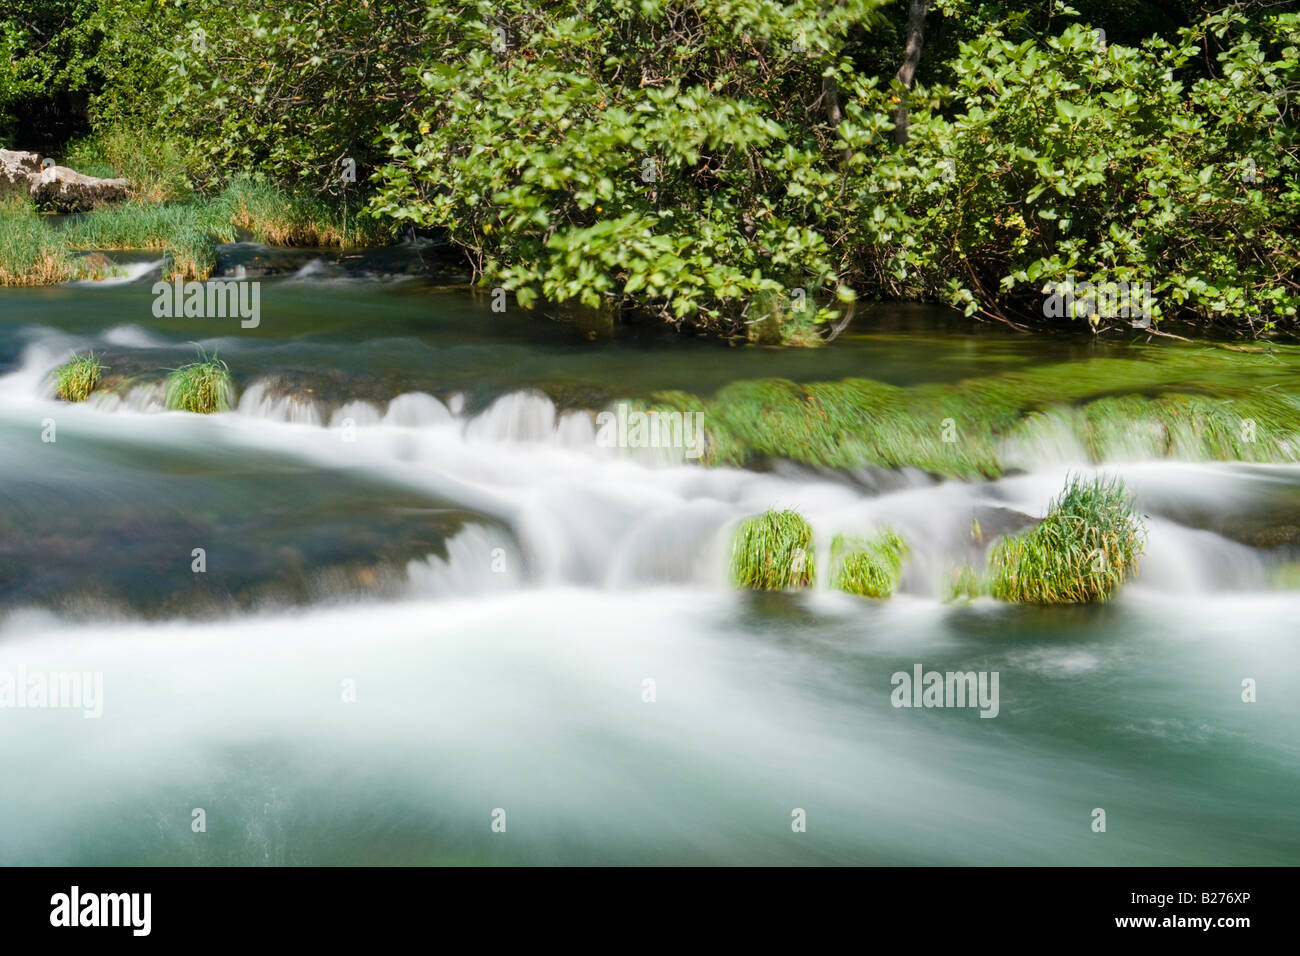 Krka waterfalls, Roski slap area, Croatia, Europe, long exposure for flowing water longexposure scenic Stock Photo